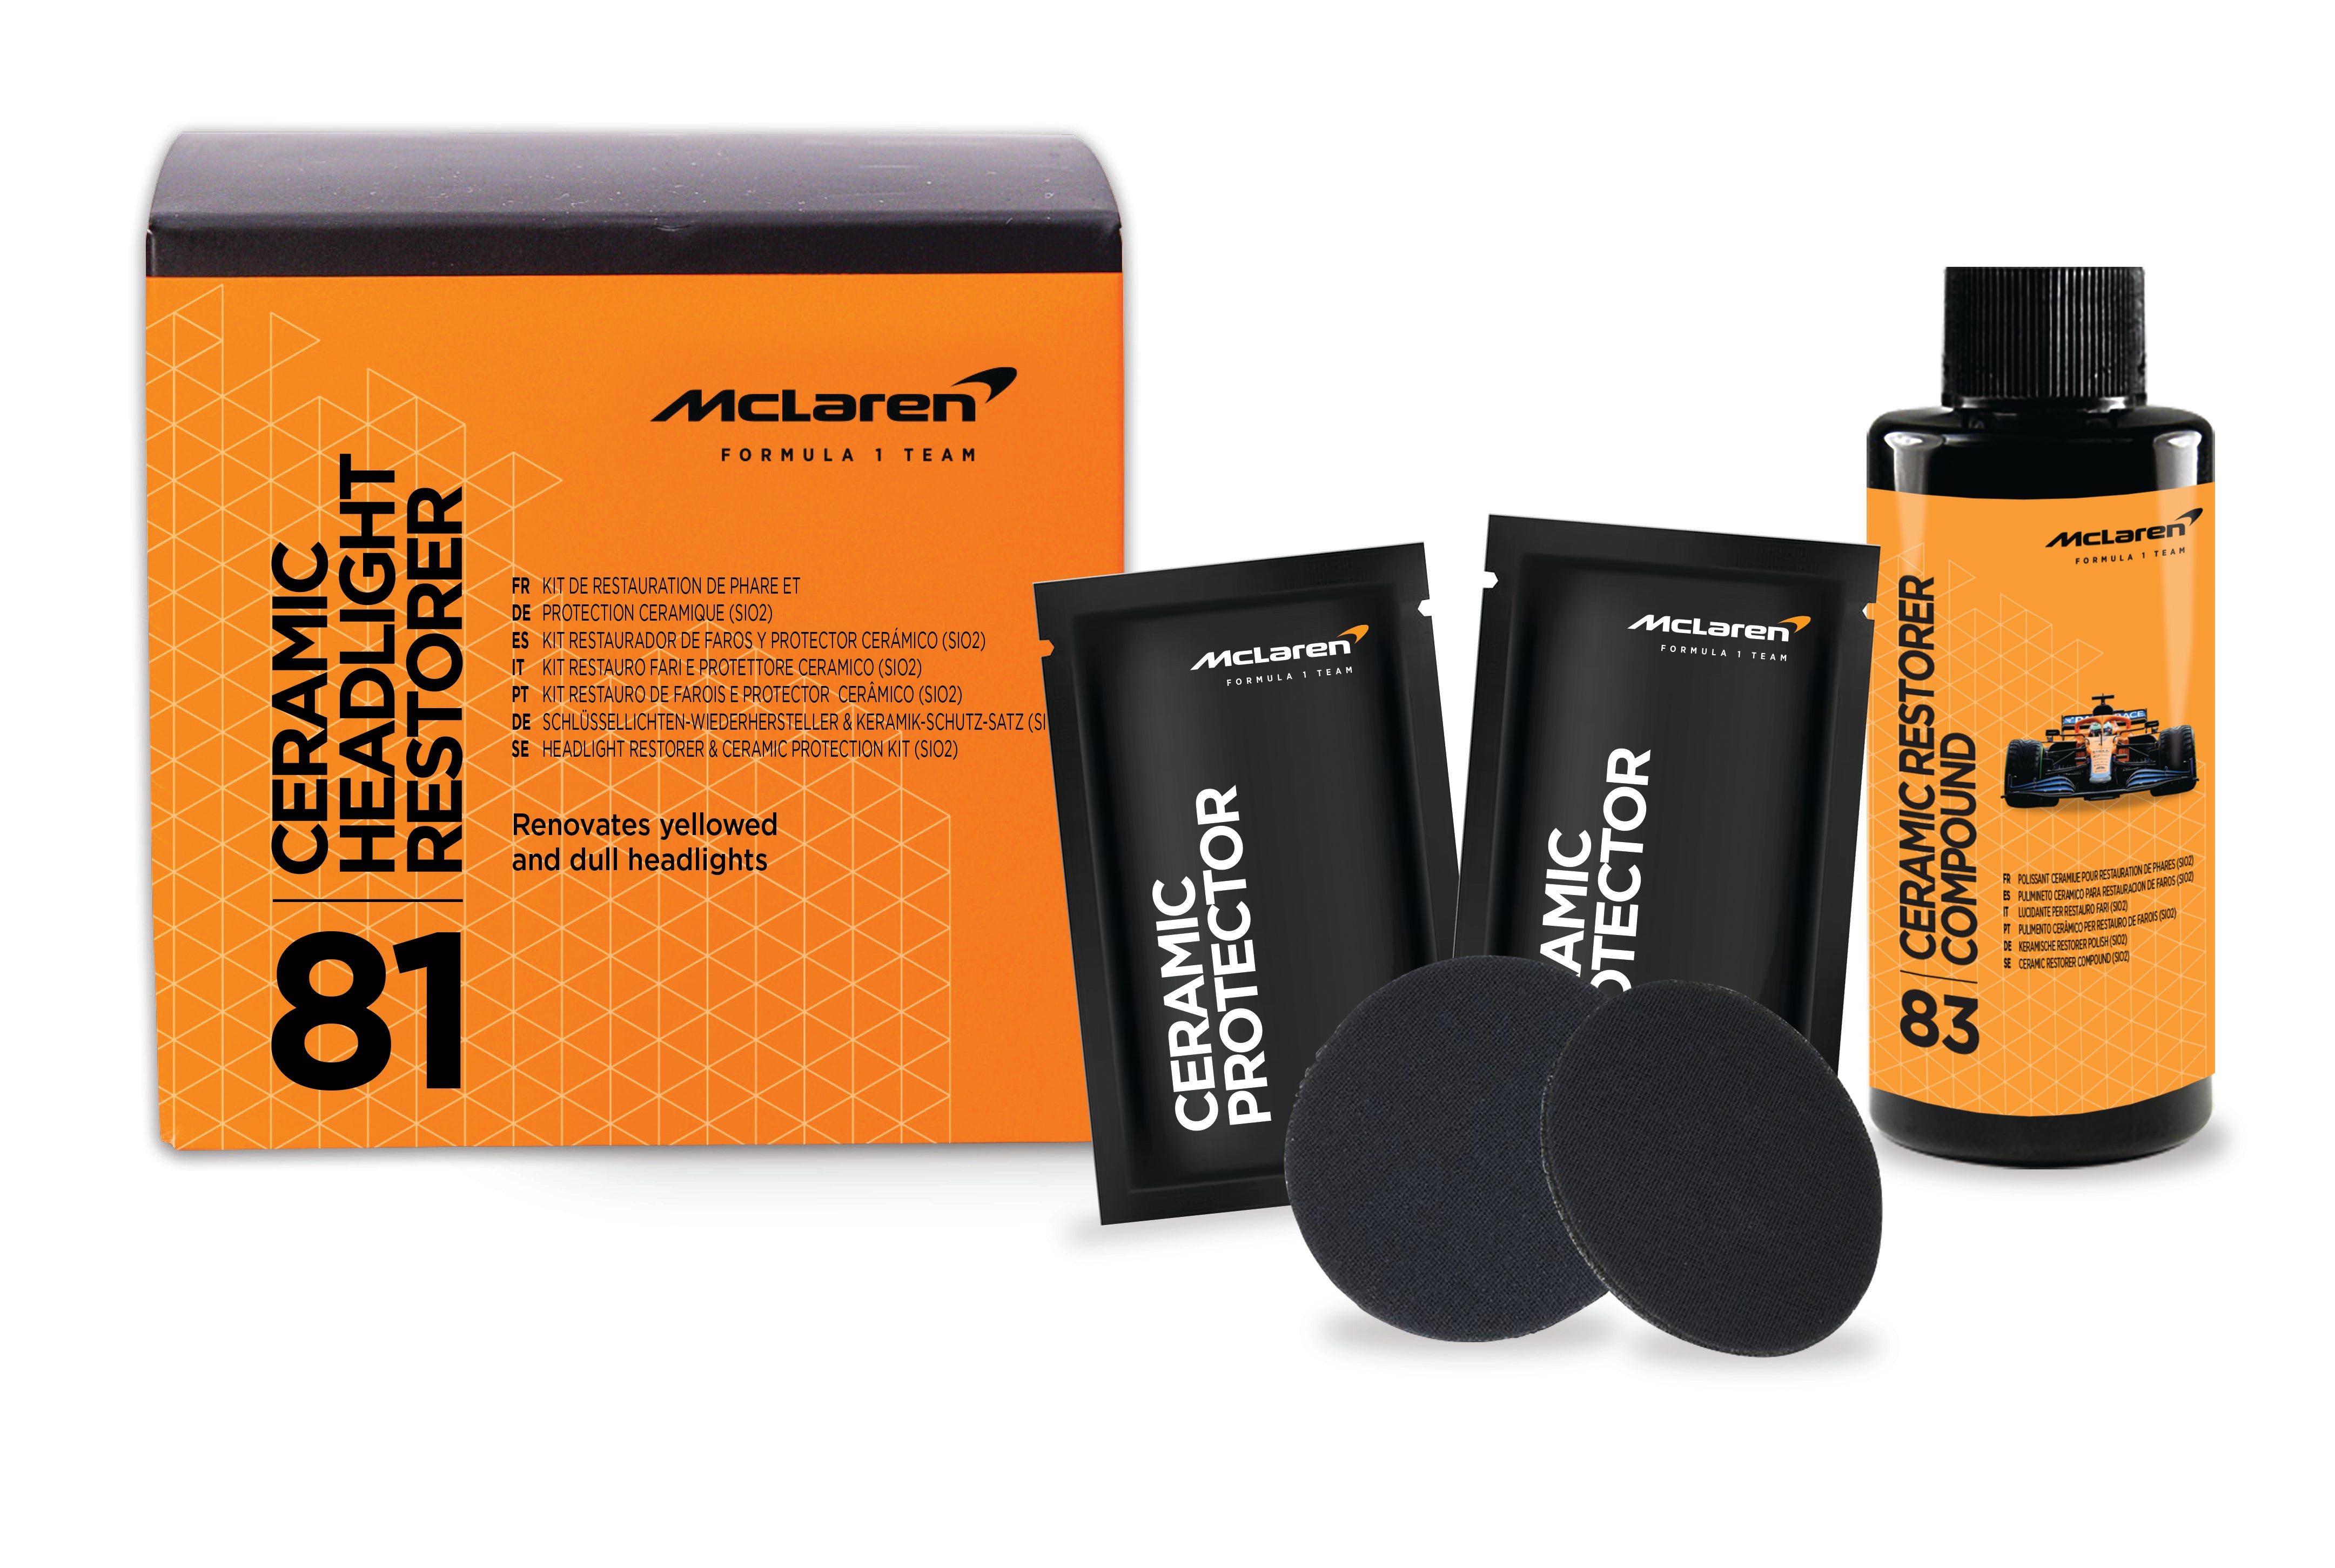 Headlight Polish & Protection Kit | Autosol